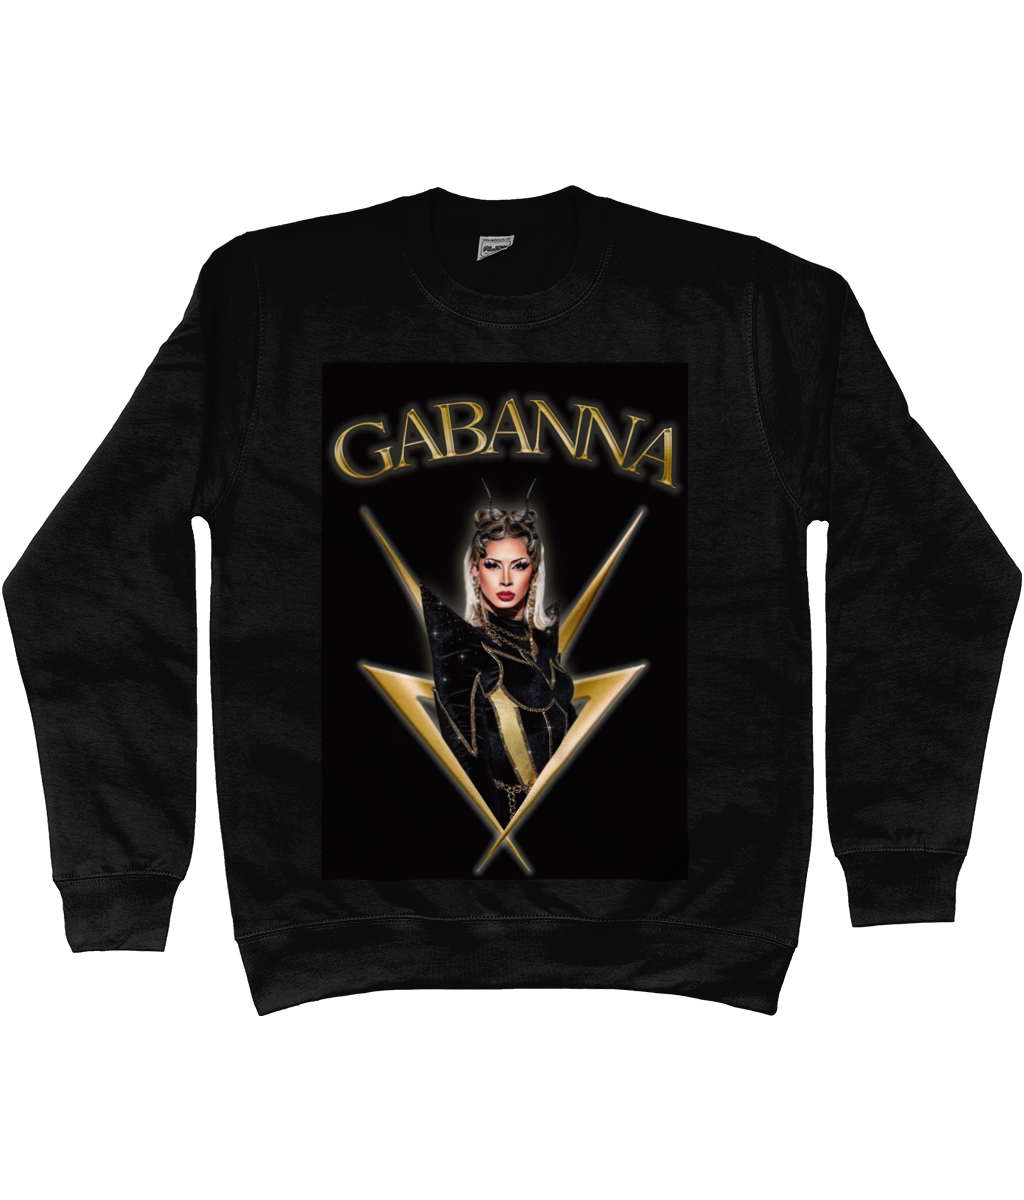 Gabanna - Black & Gold Sweatshirt